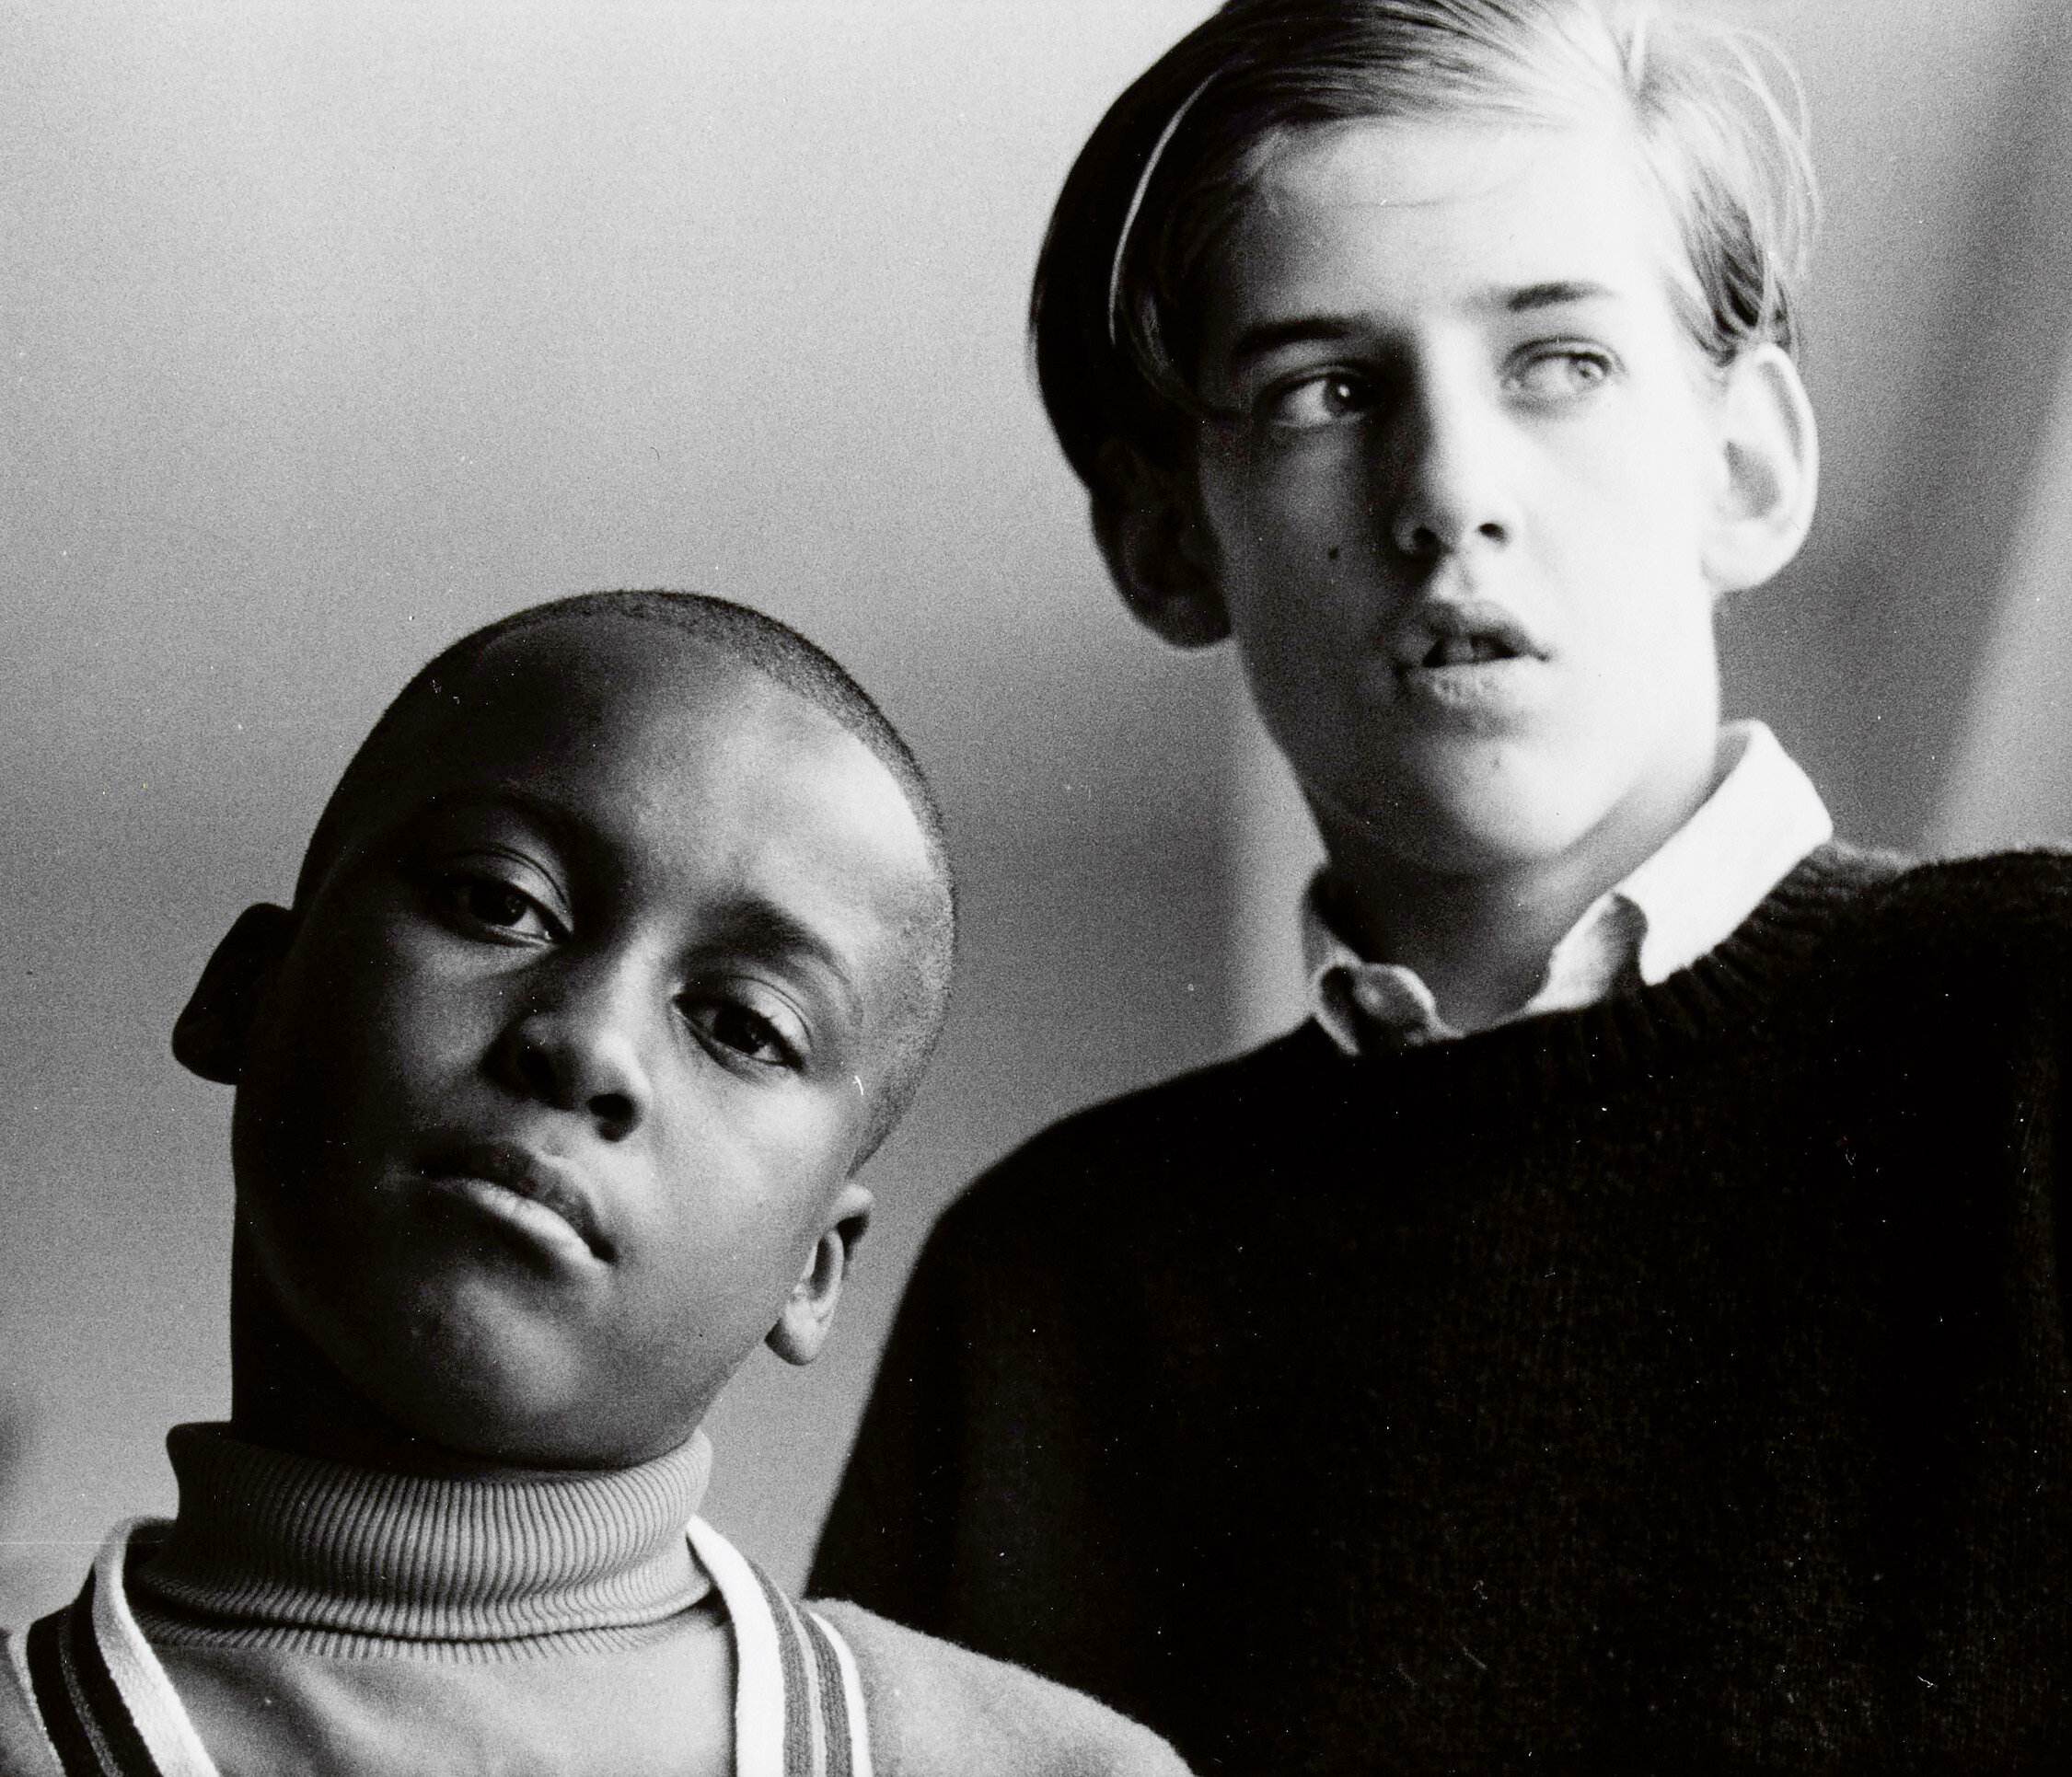  Young Men, 1968 